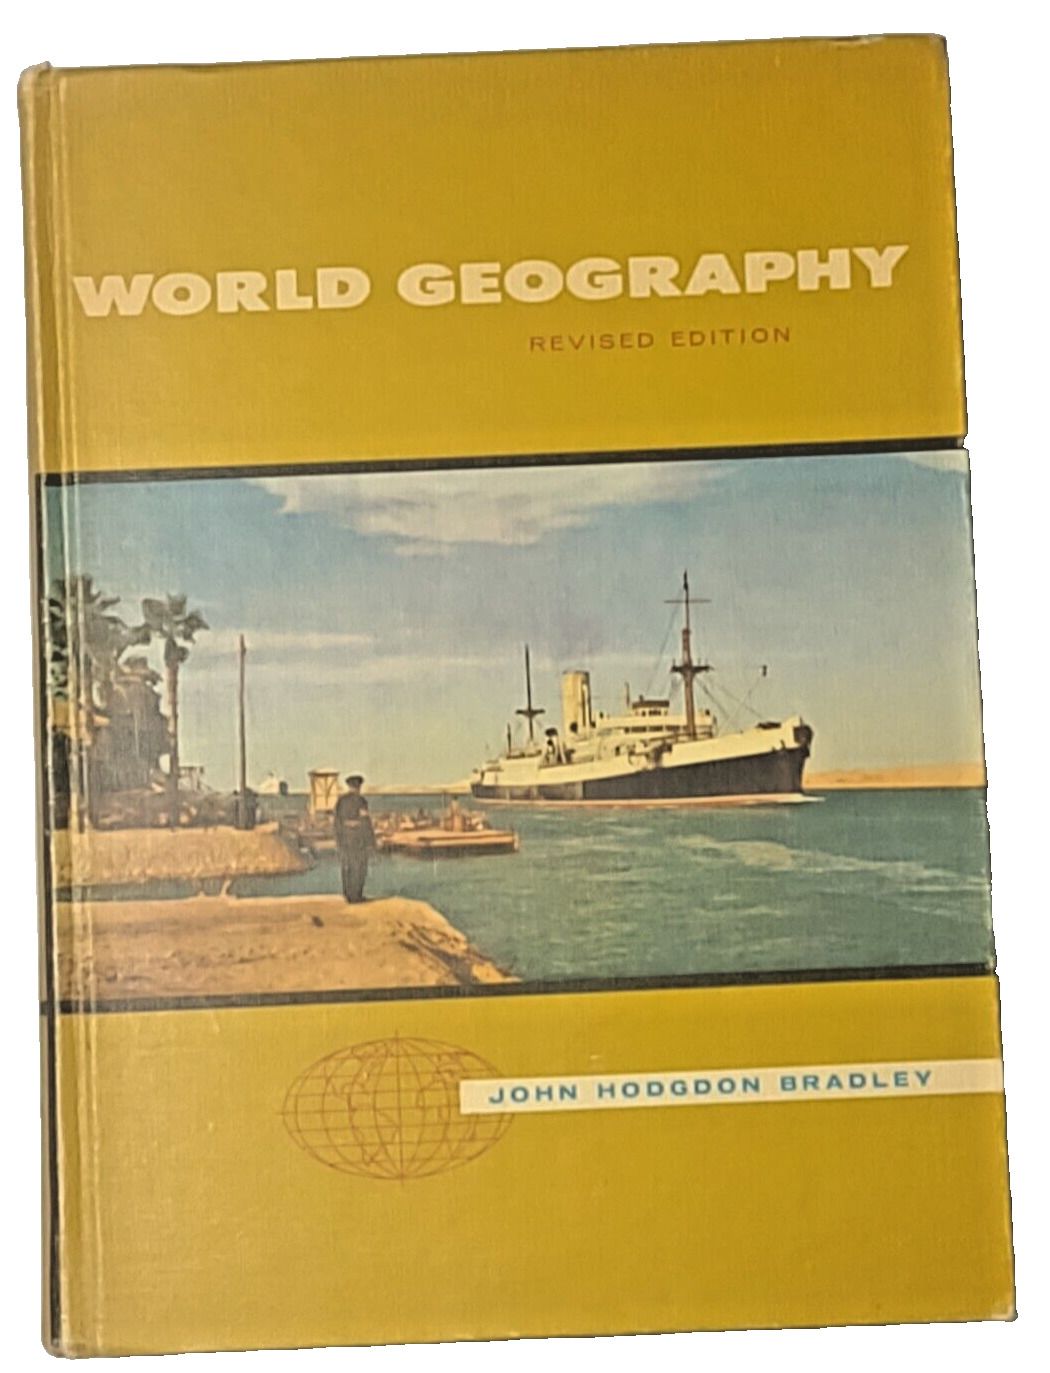 1954 Vintage  World Geography by John Hodgdon Bradley   42524